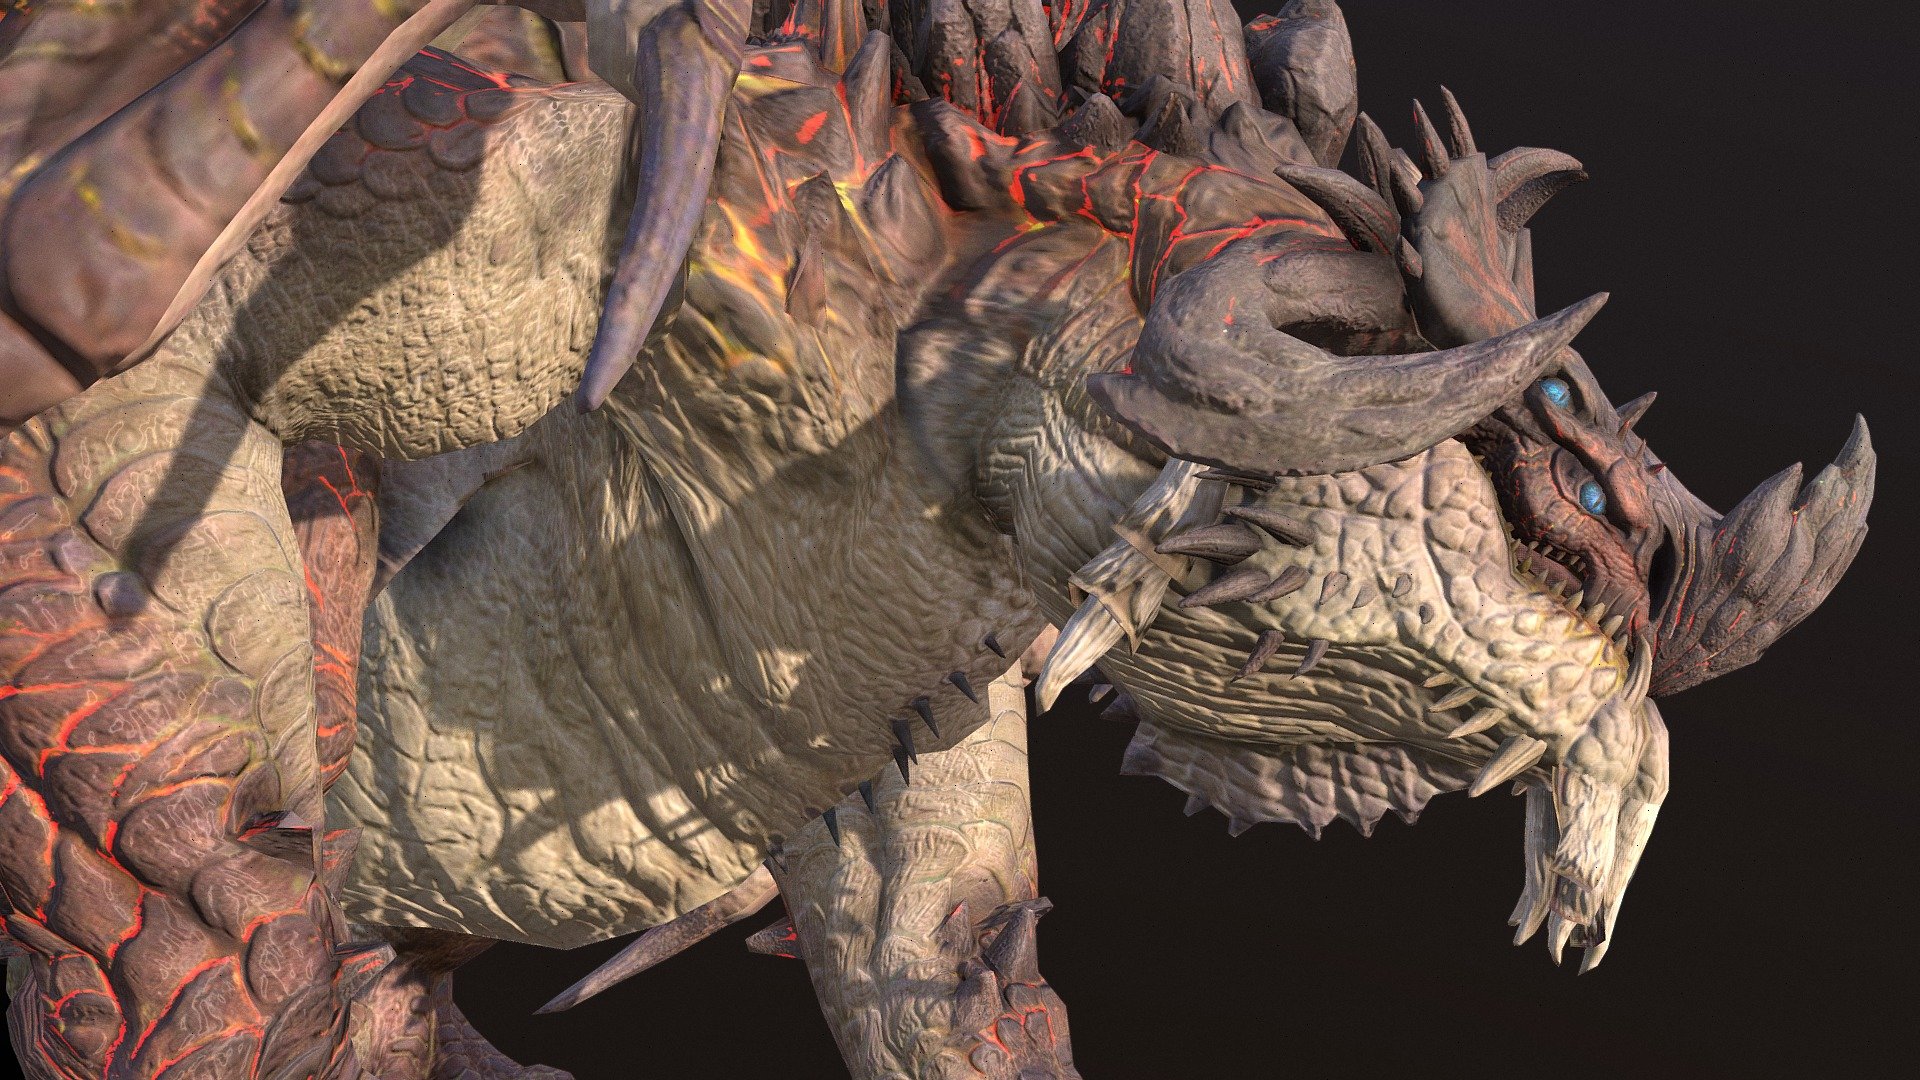 Boss Dragon Animated walk cycle
fbx file format - Boss Dragon Animated - 3D model by monstermod 3d model